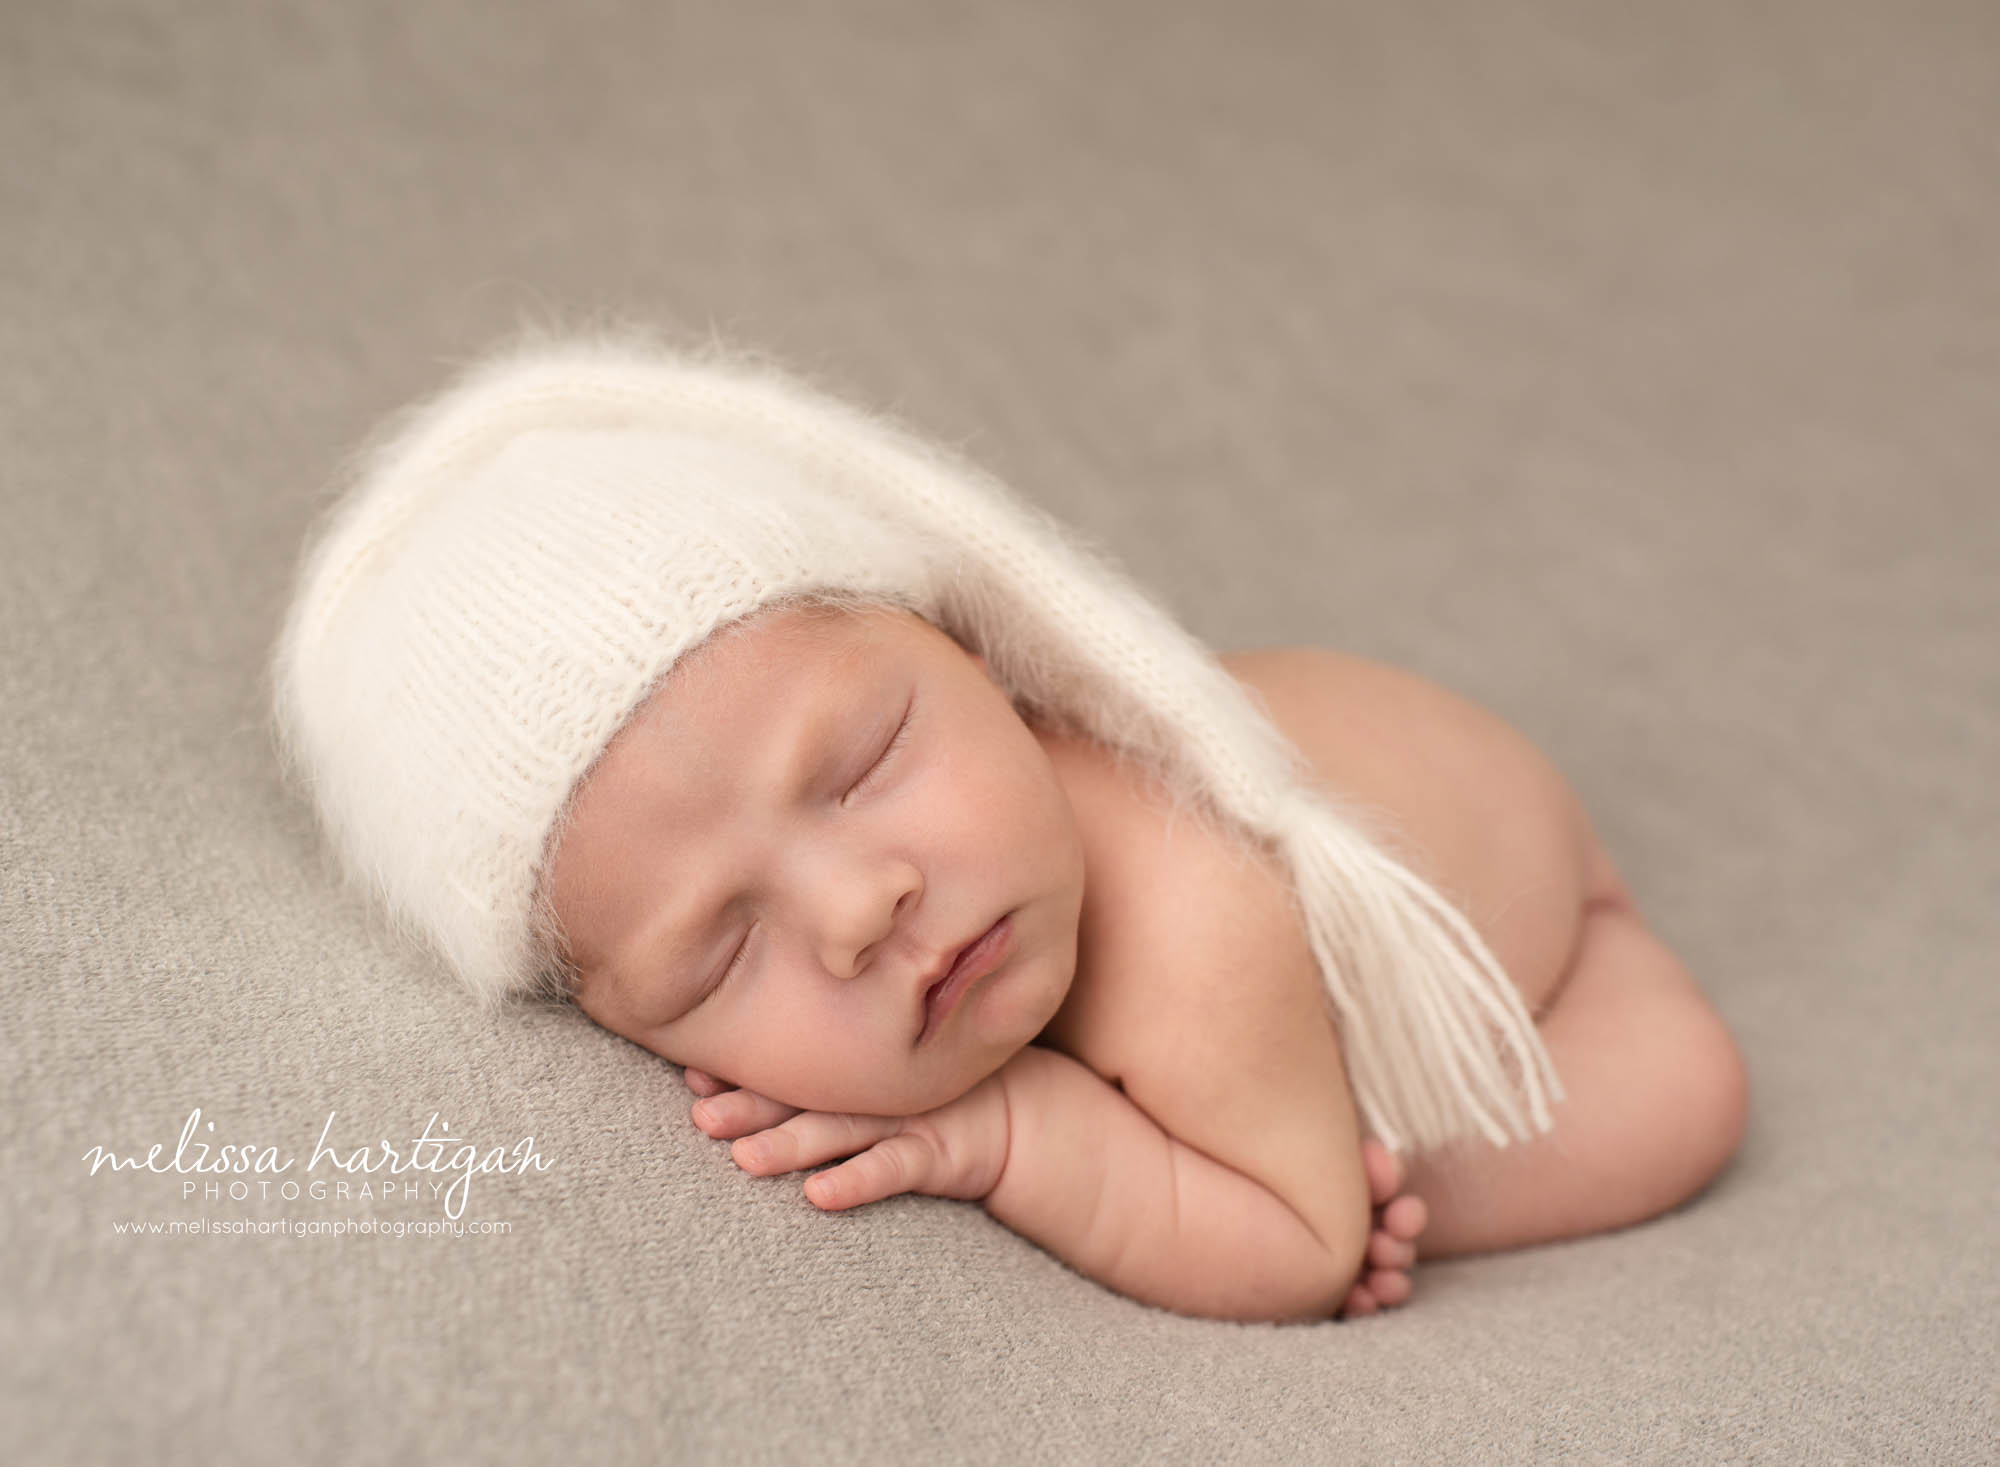 newborn baby boy posed modified taco pose wearing white knitted sleepy cap